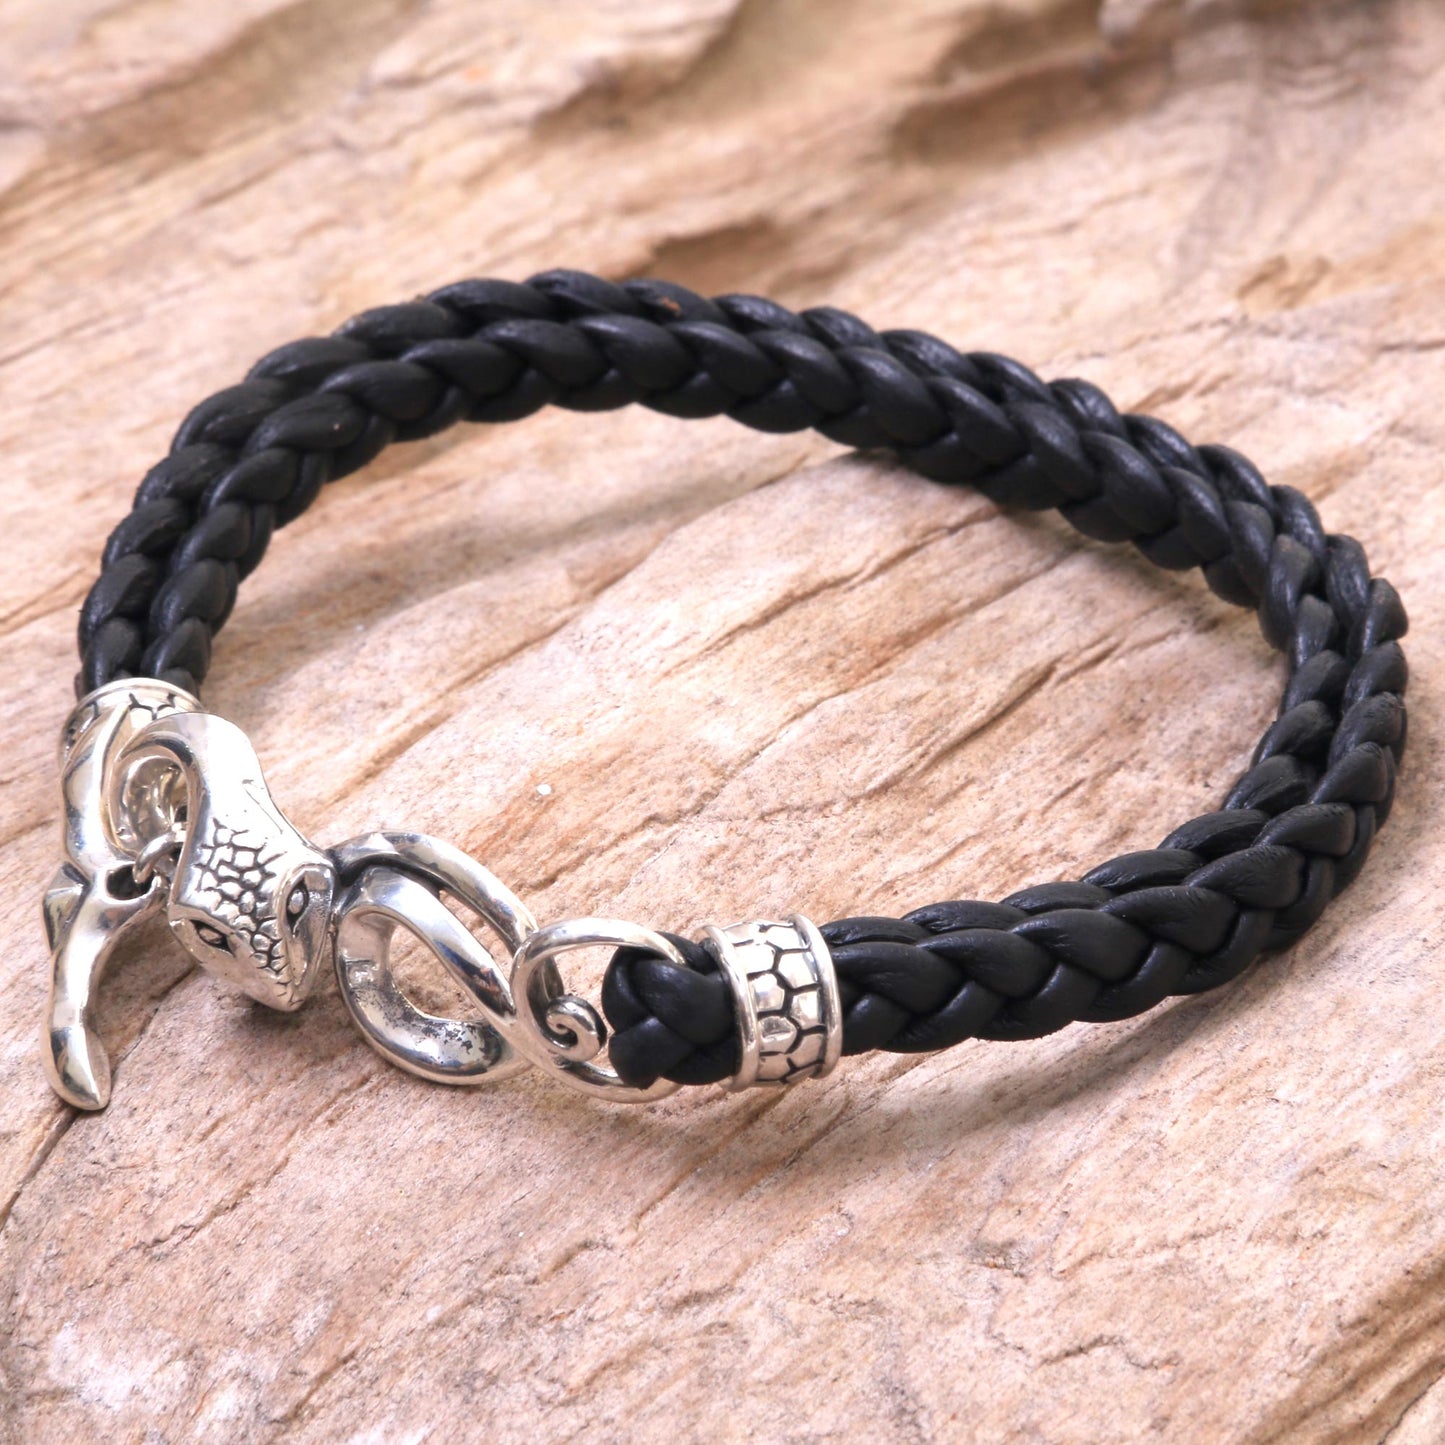 Cobra Men's Black Leather Bracelet with Silver Snake Clasp